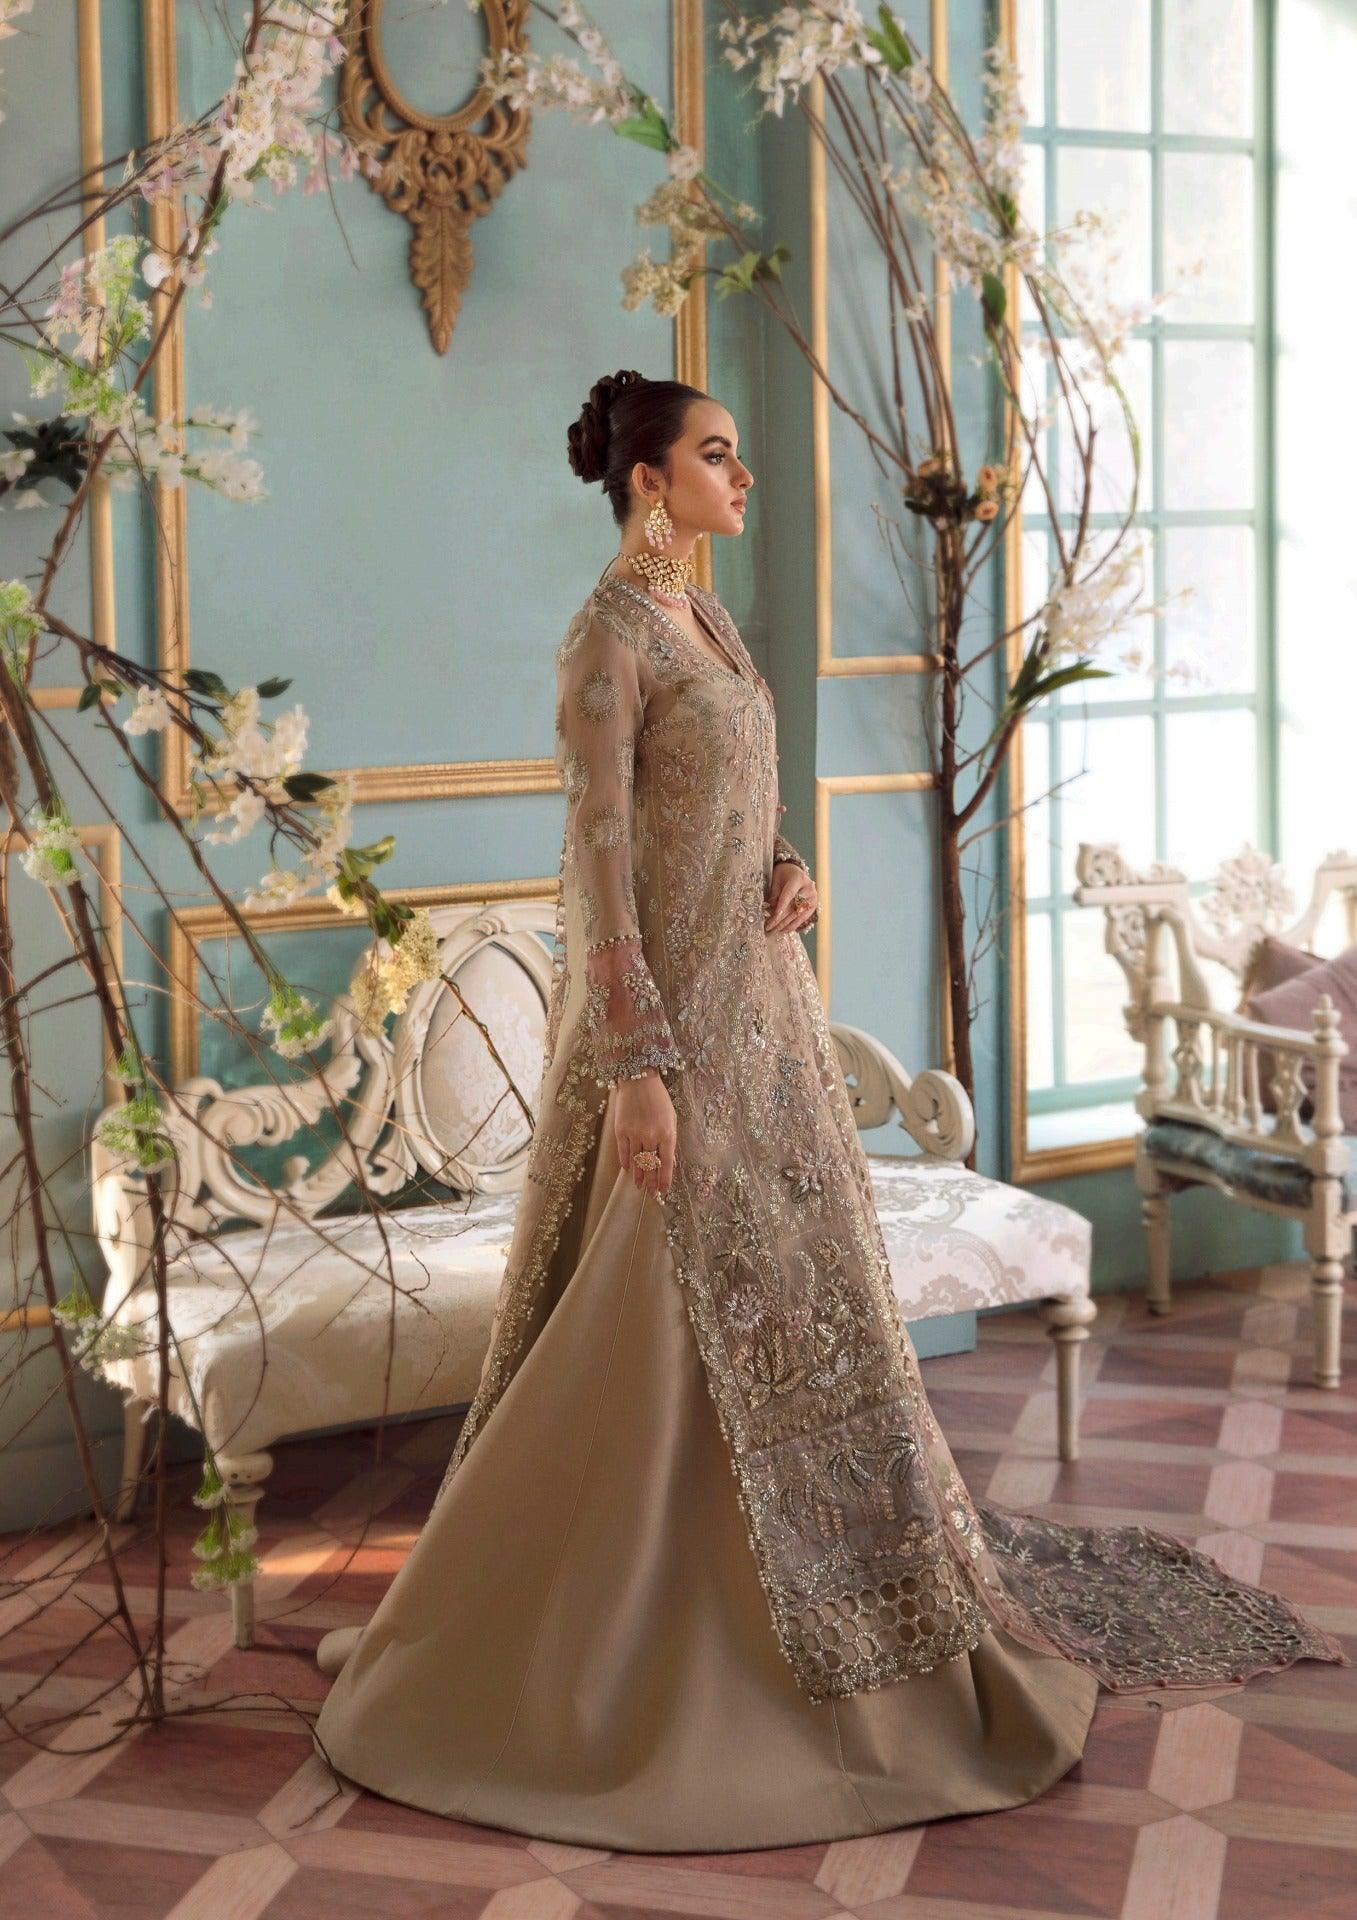 Un lys - WU2 - Claire De Lune Wedding by Republic Womenswear - Un lys - WU2 - Claire De Lune Wedding by Republic Womenswear - Shahana Collection